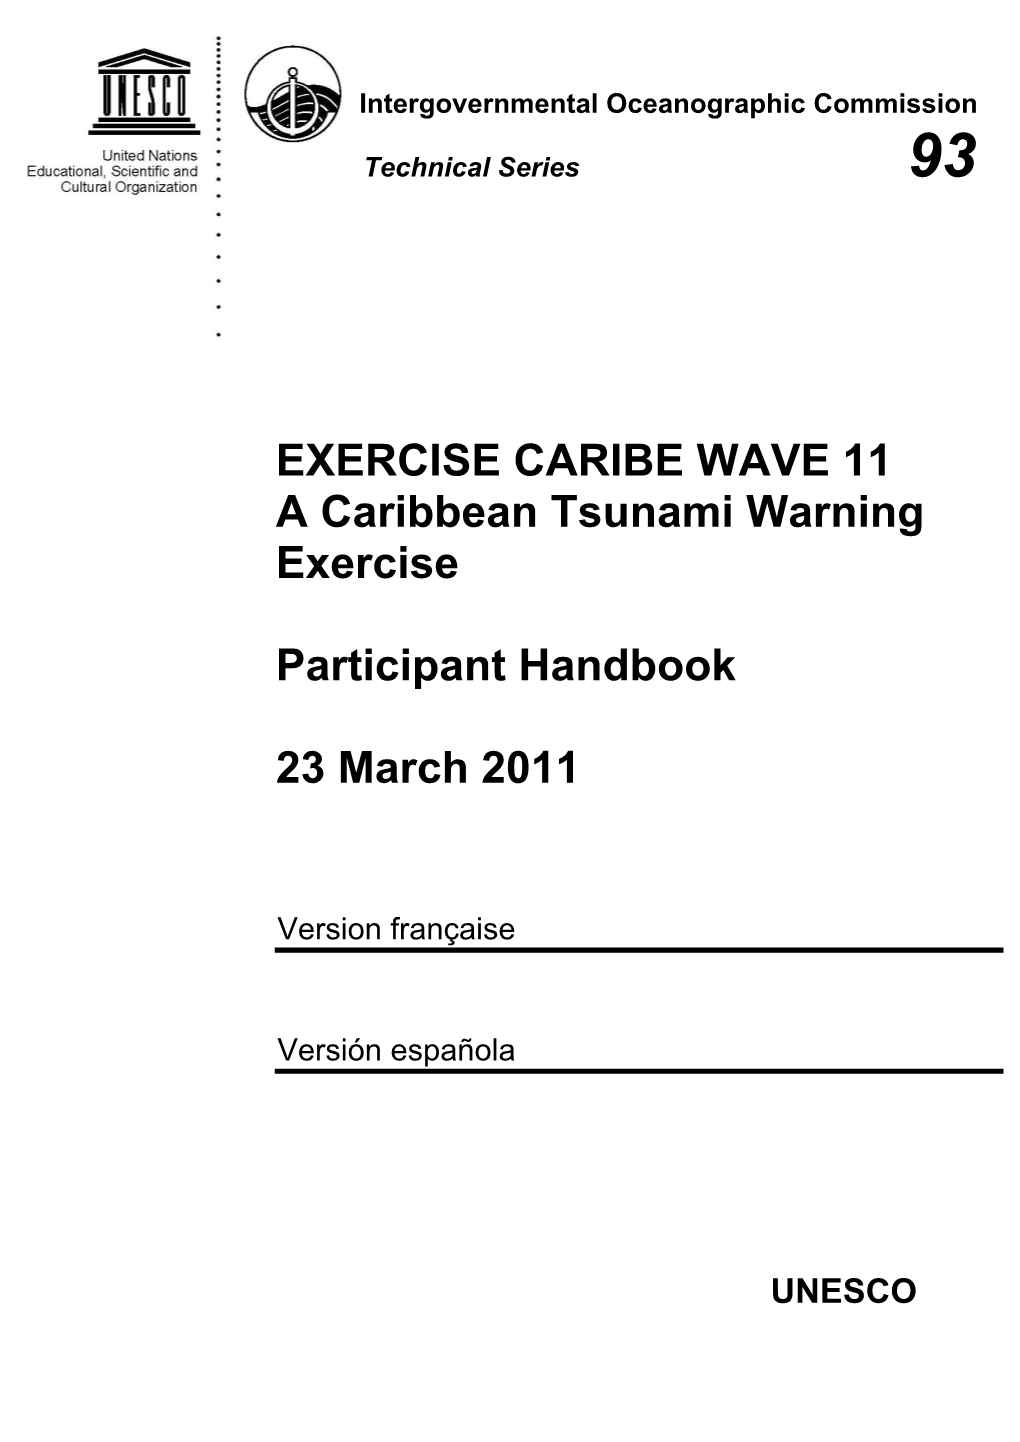 Exercise Caribe Wave 11: a Caribbean Tsunami Warning